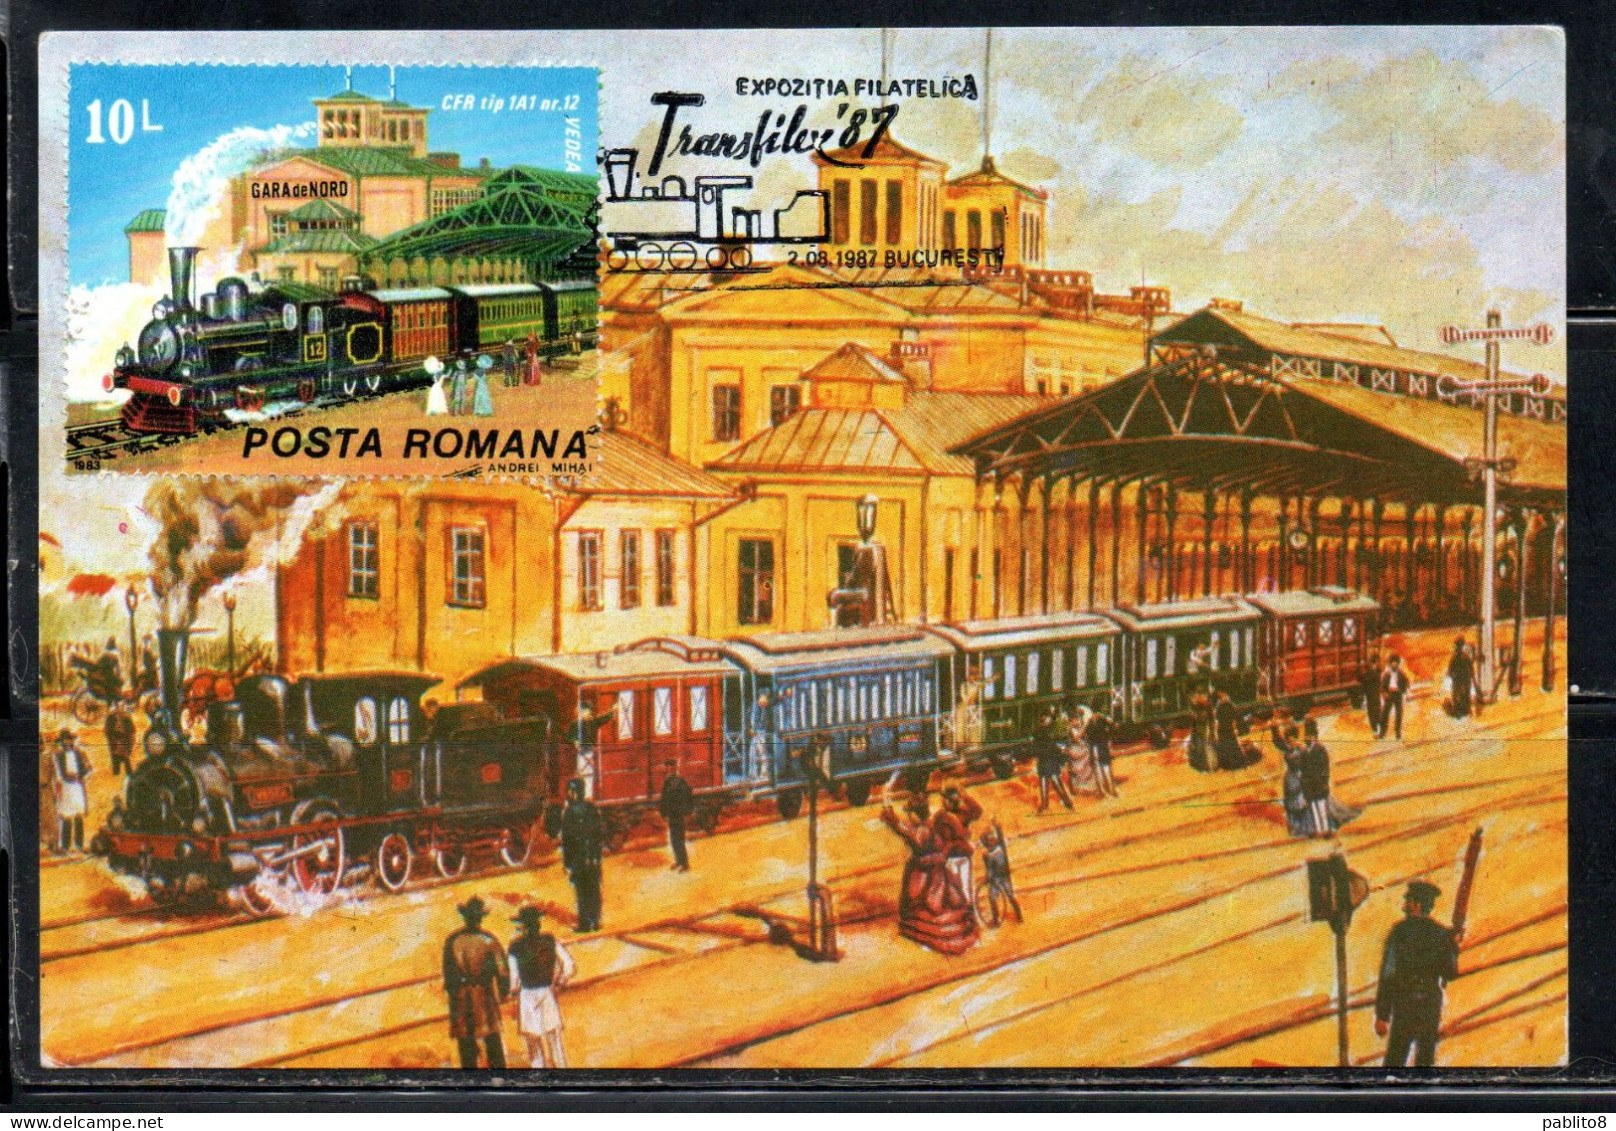 ROMANIA 1983  TRAIN STATION LEAVING GARE DE NORD CFR 1A1 ORIENT EXPRESS CENTENARY 10L MAXI MAXIMUM CARD - Maximumkarten (MC)